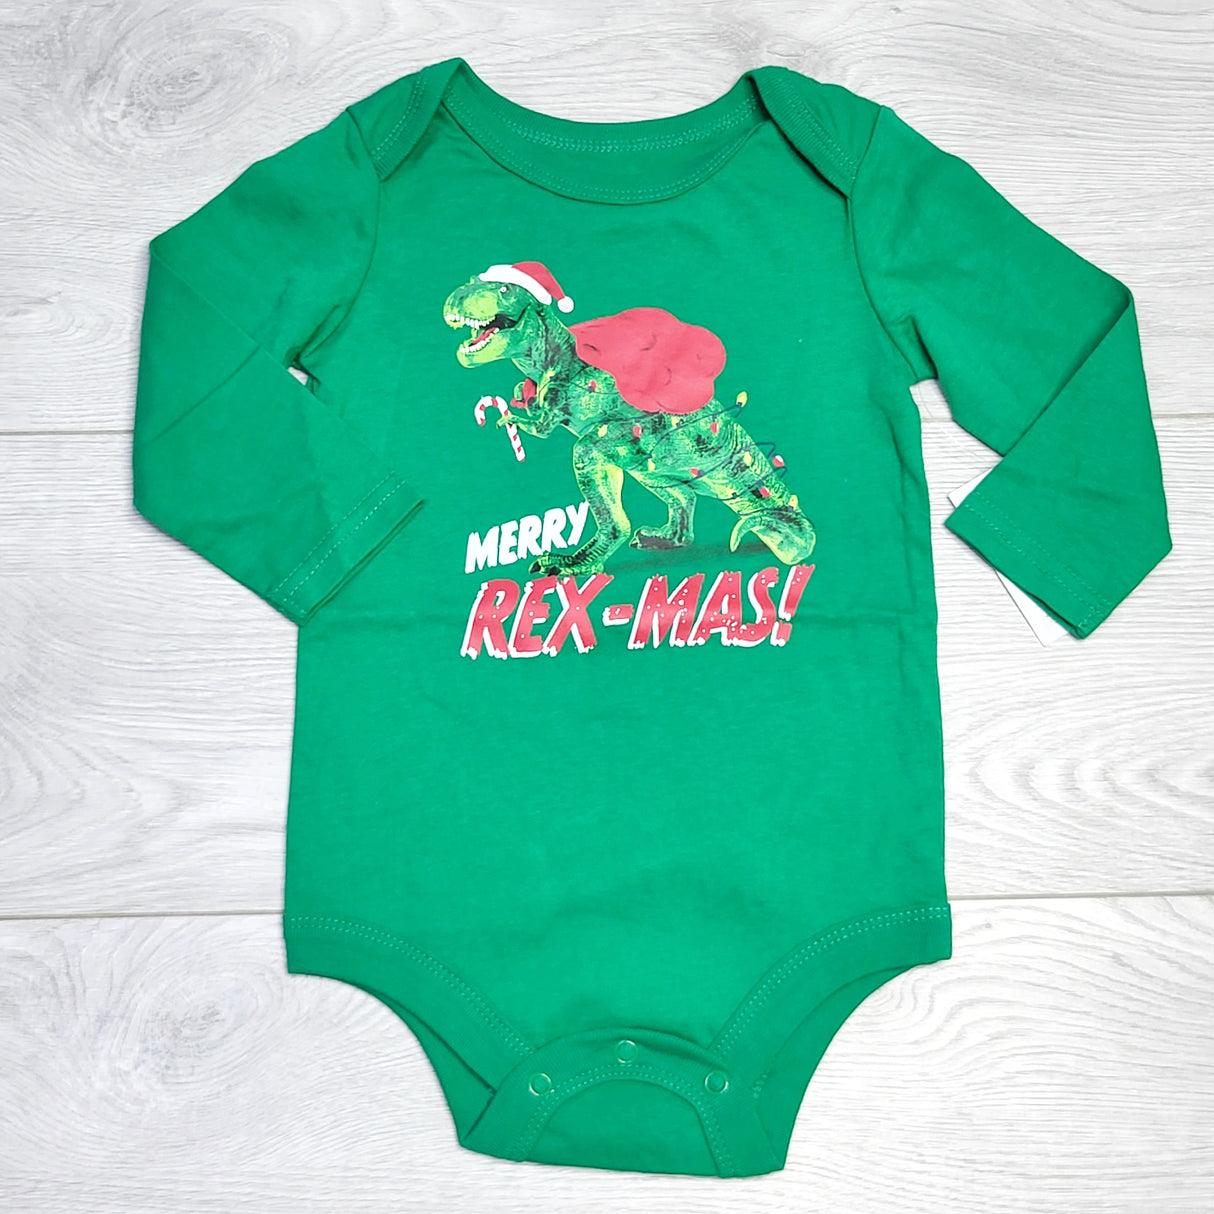 RZA21 - NEW - George green "Merry Rex-Mas" bodysuit. Size 6-12 months